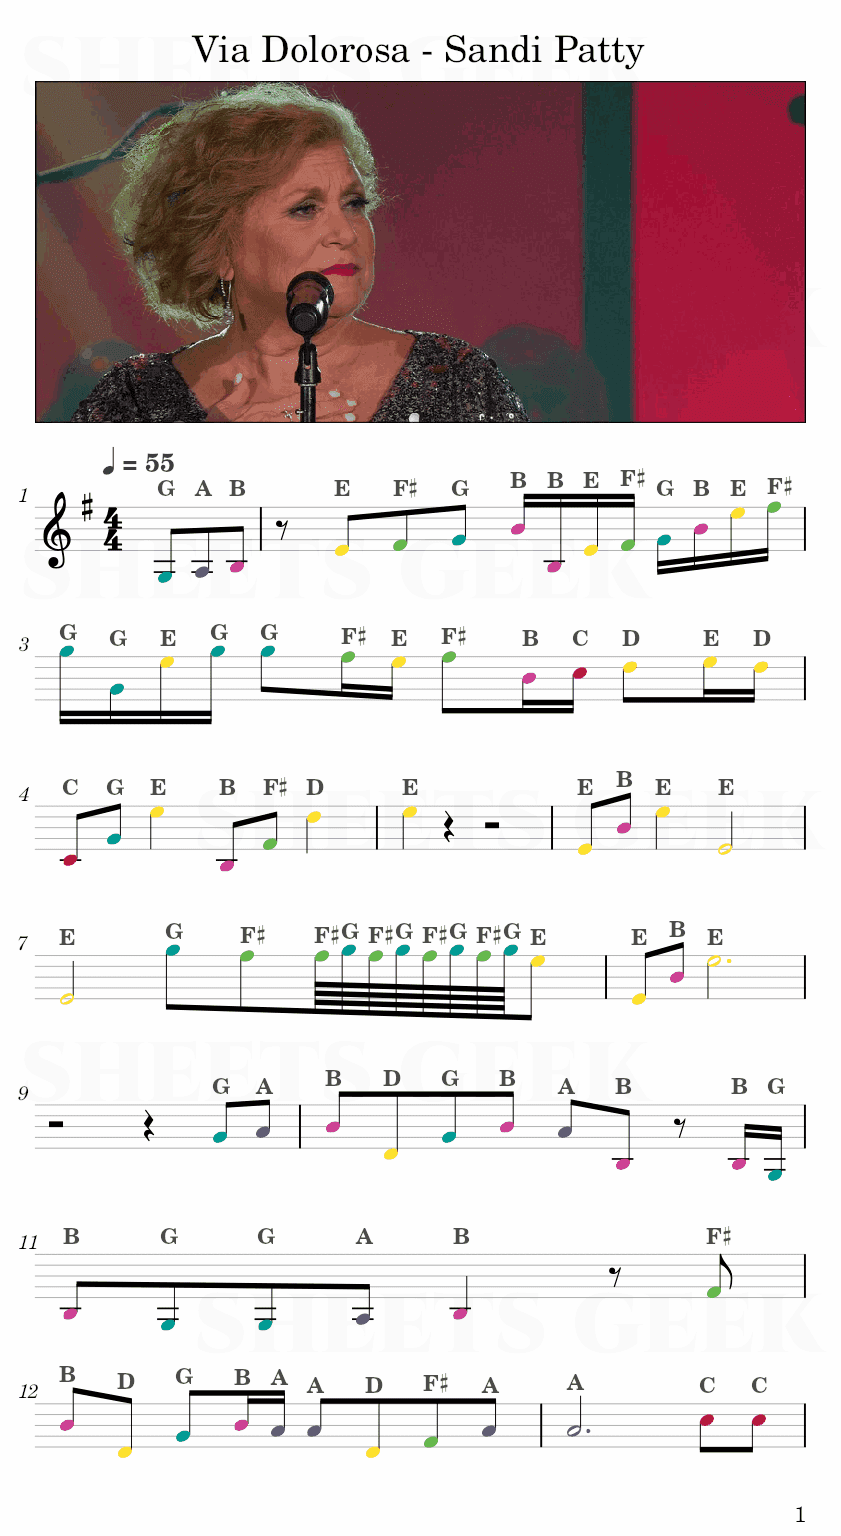 Via Dolorosa - Sandi Patty Easy Sheet Music Free for piano, keyboard, flute, violin, sax, cello page 1